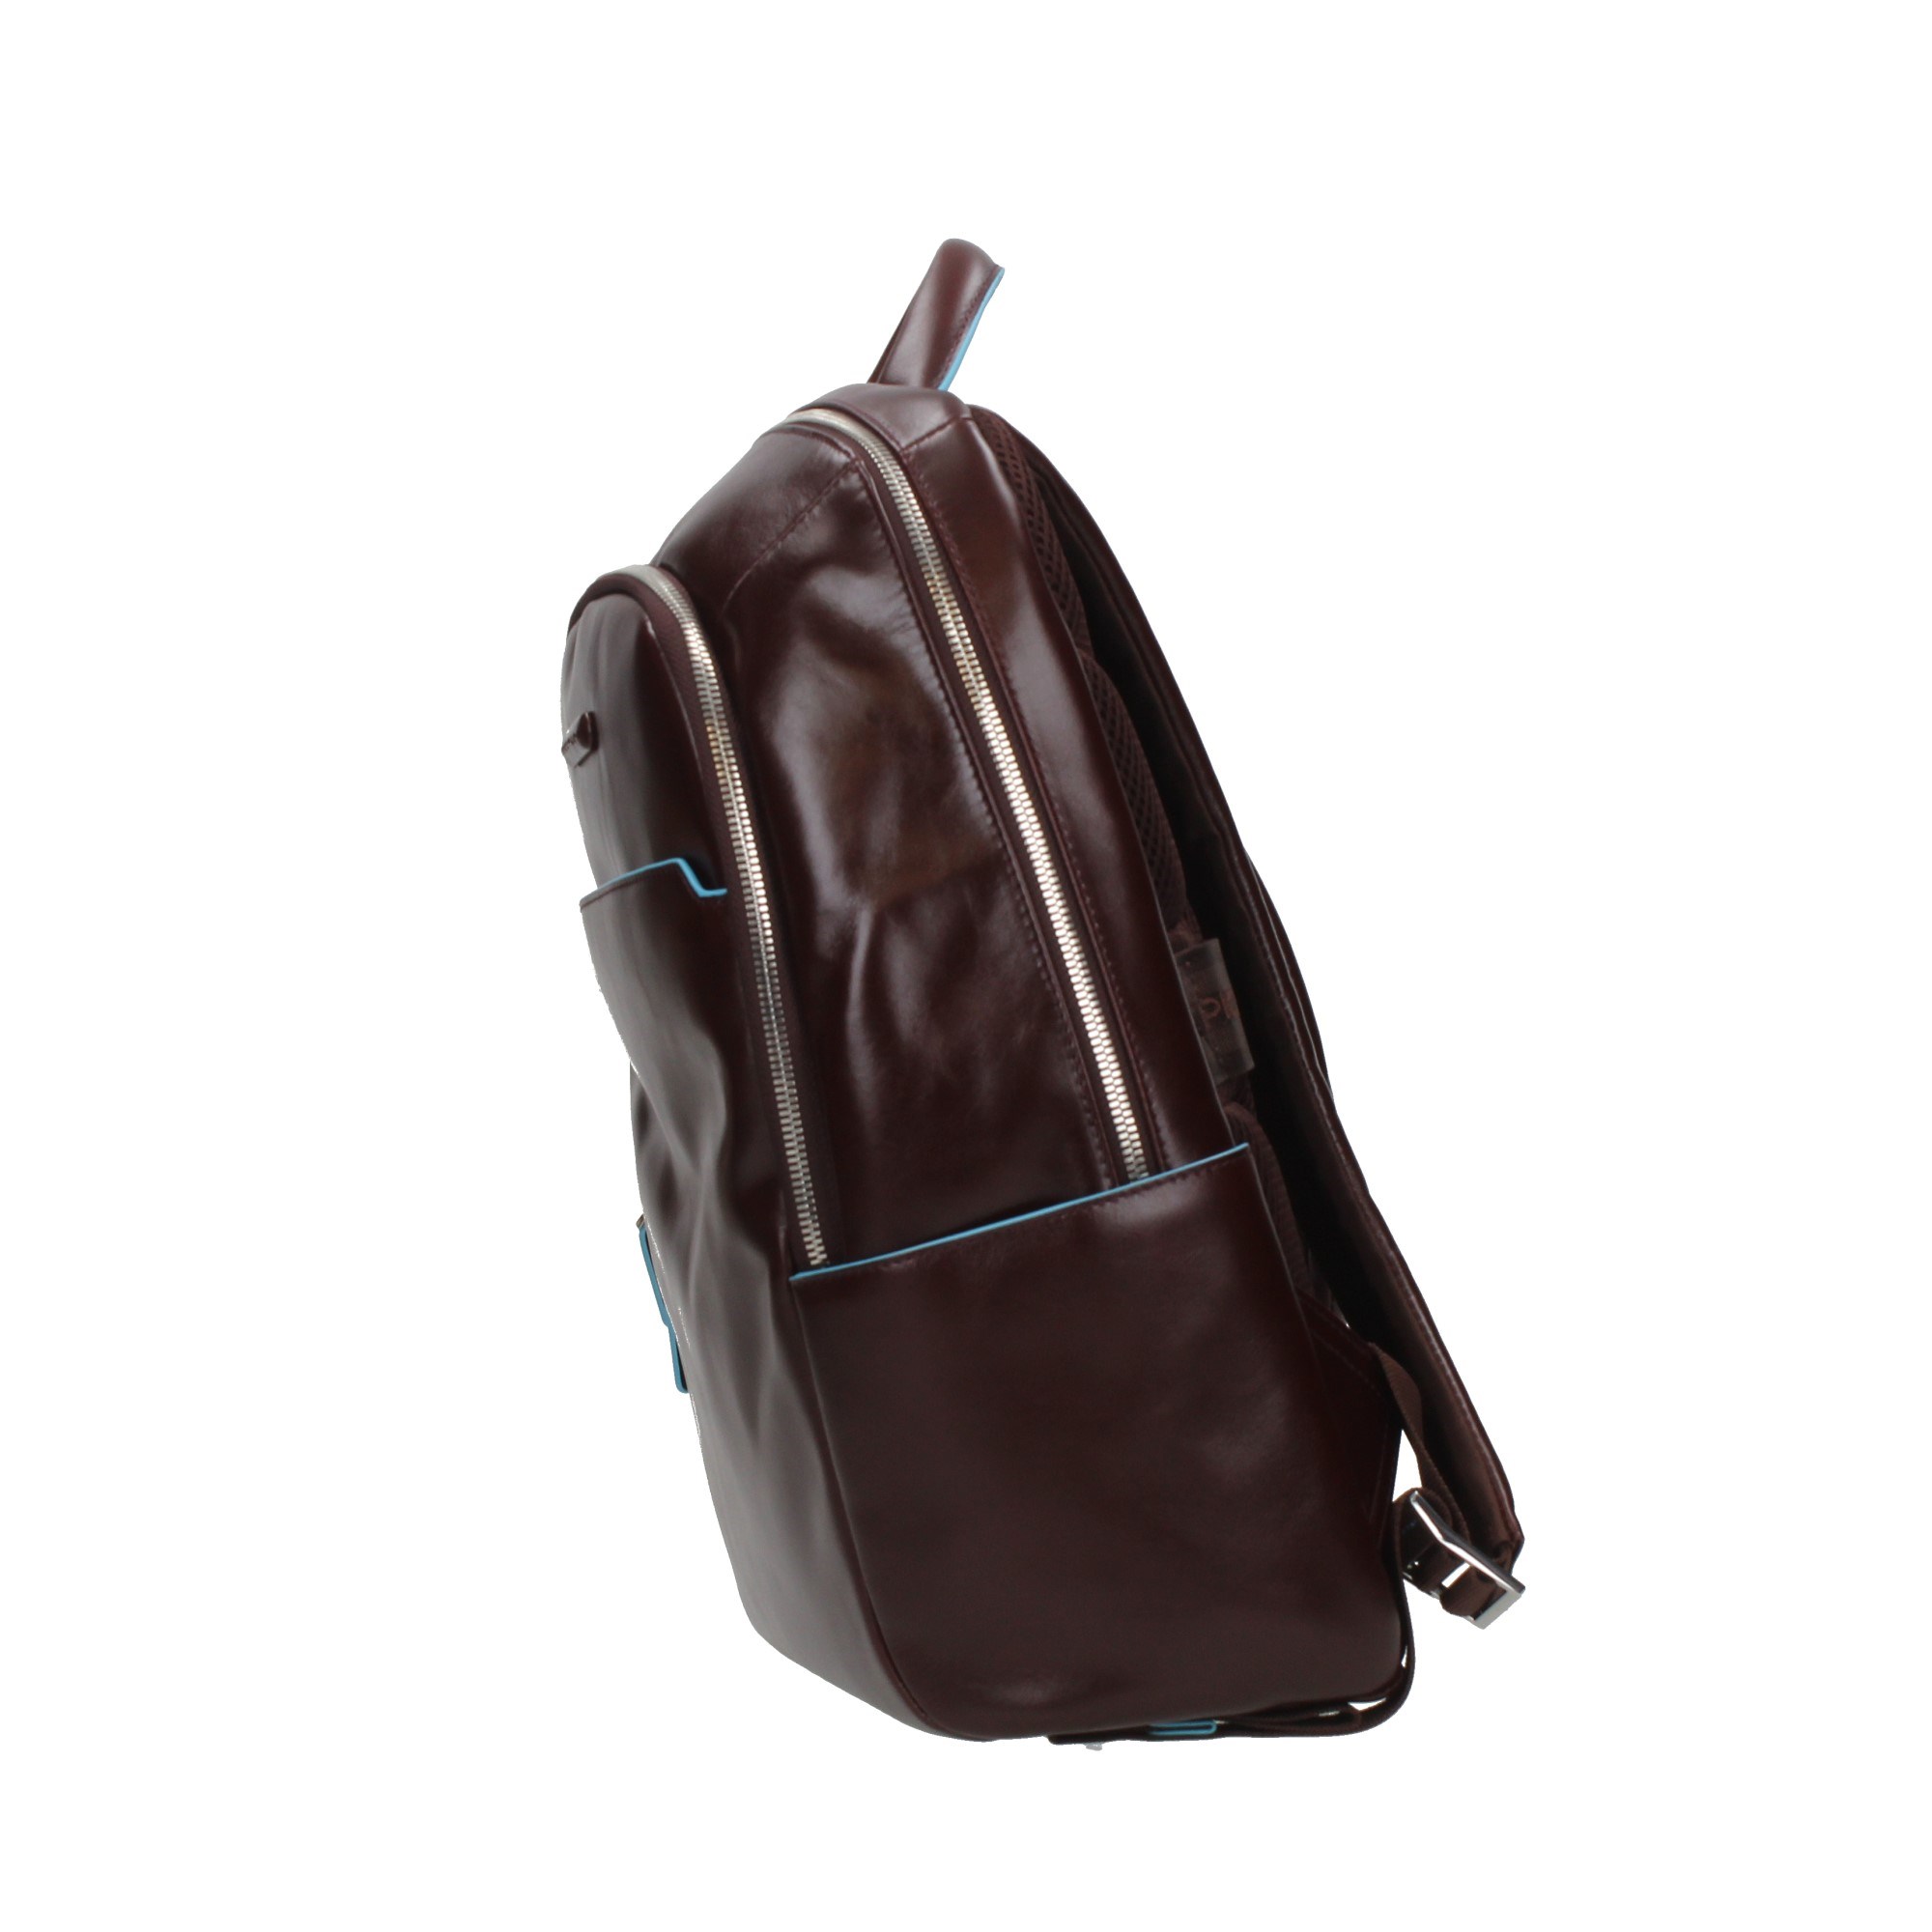 Piquadro. Accessories Man Backpack CA3214B2/MO